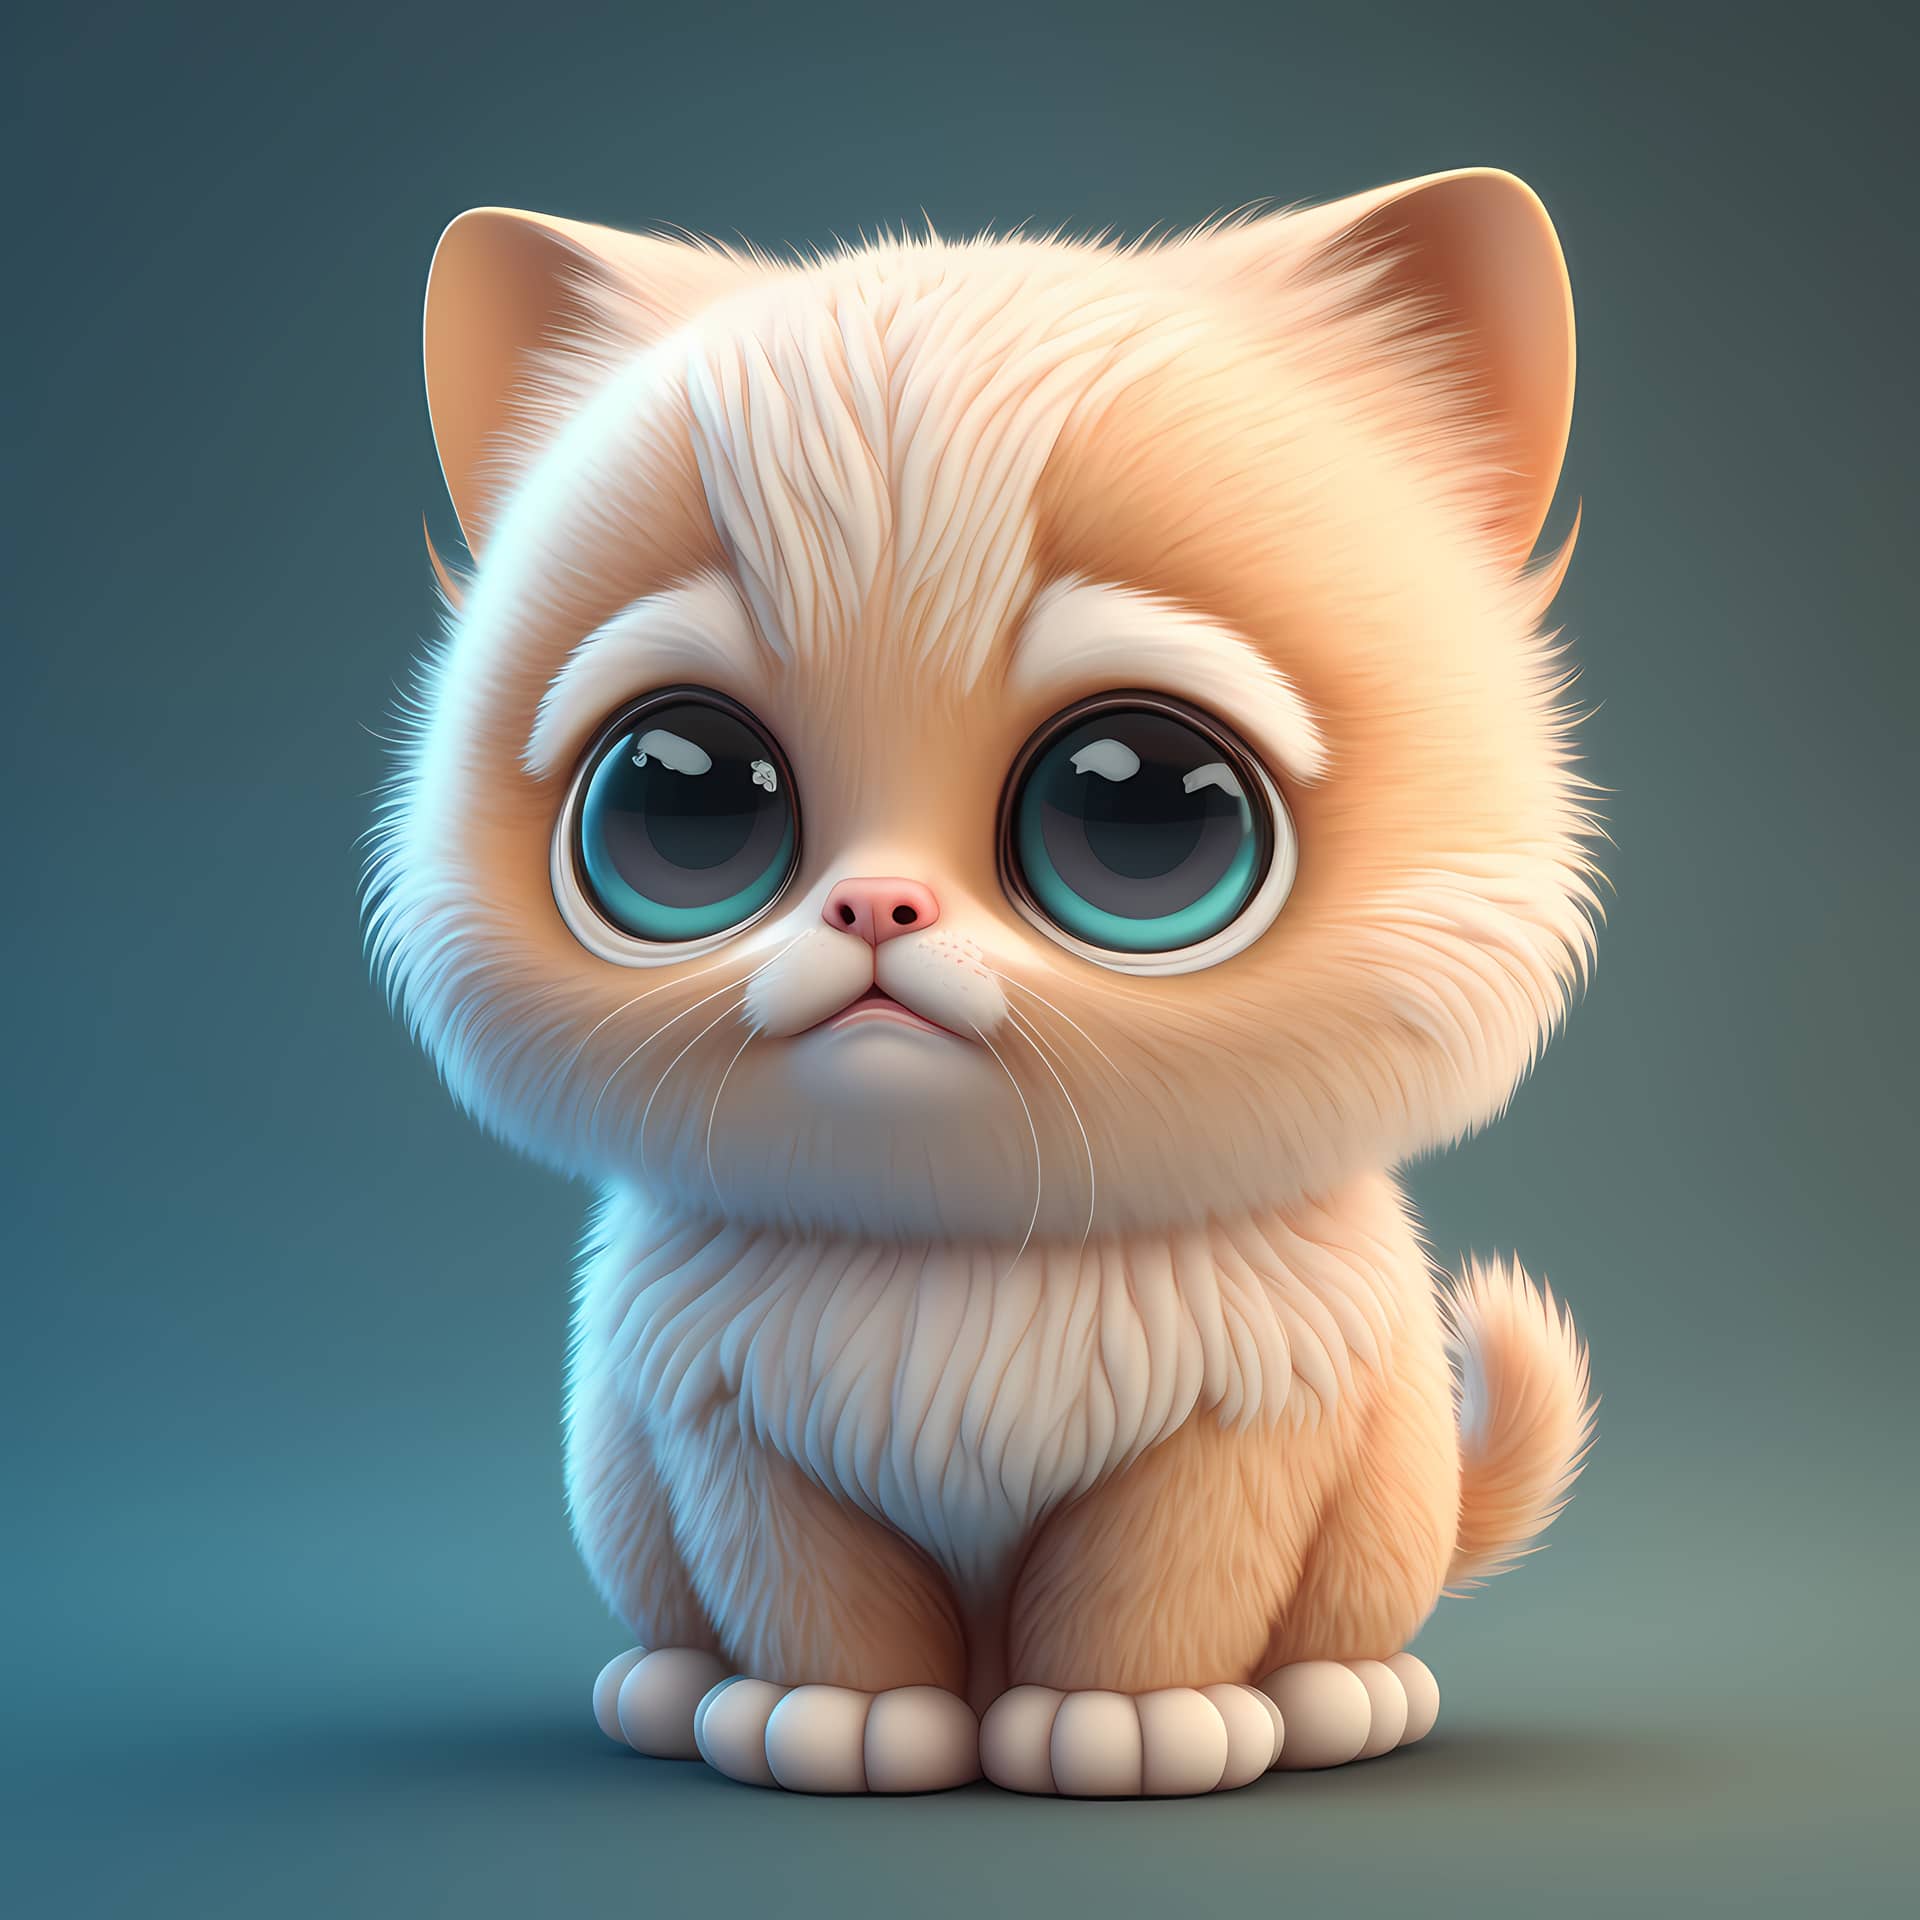 Adorable cute chubby cat 3d render excellent picture